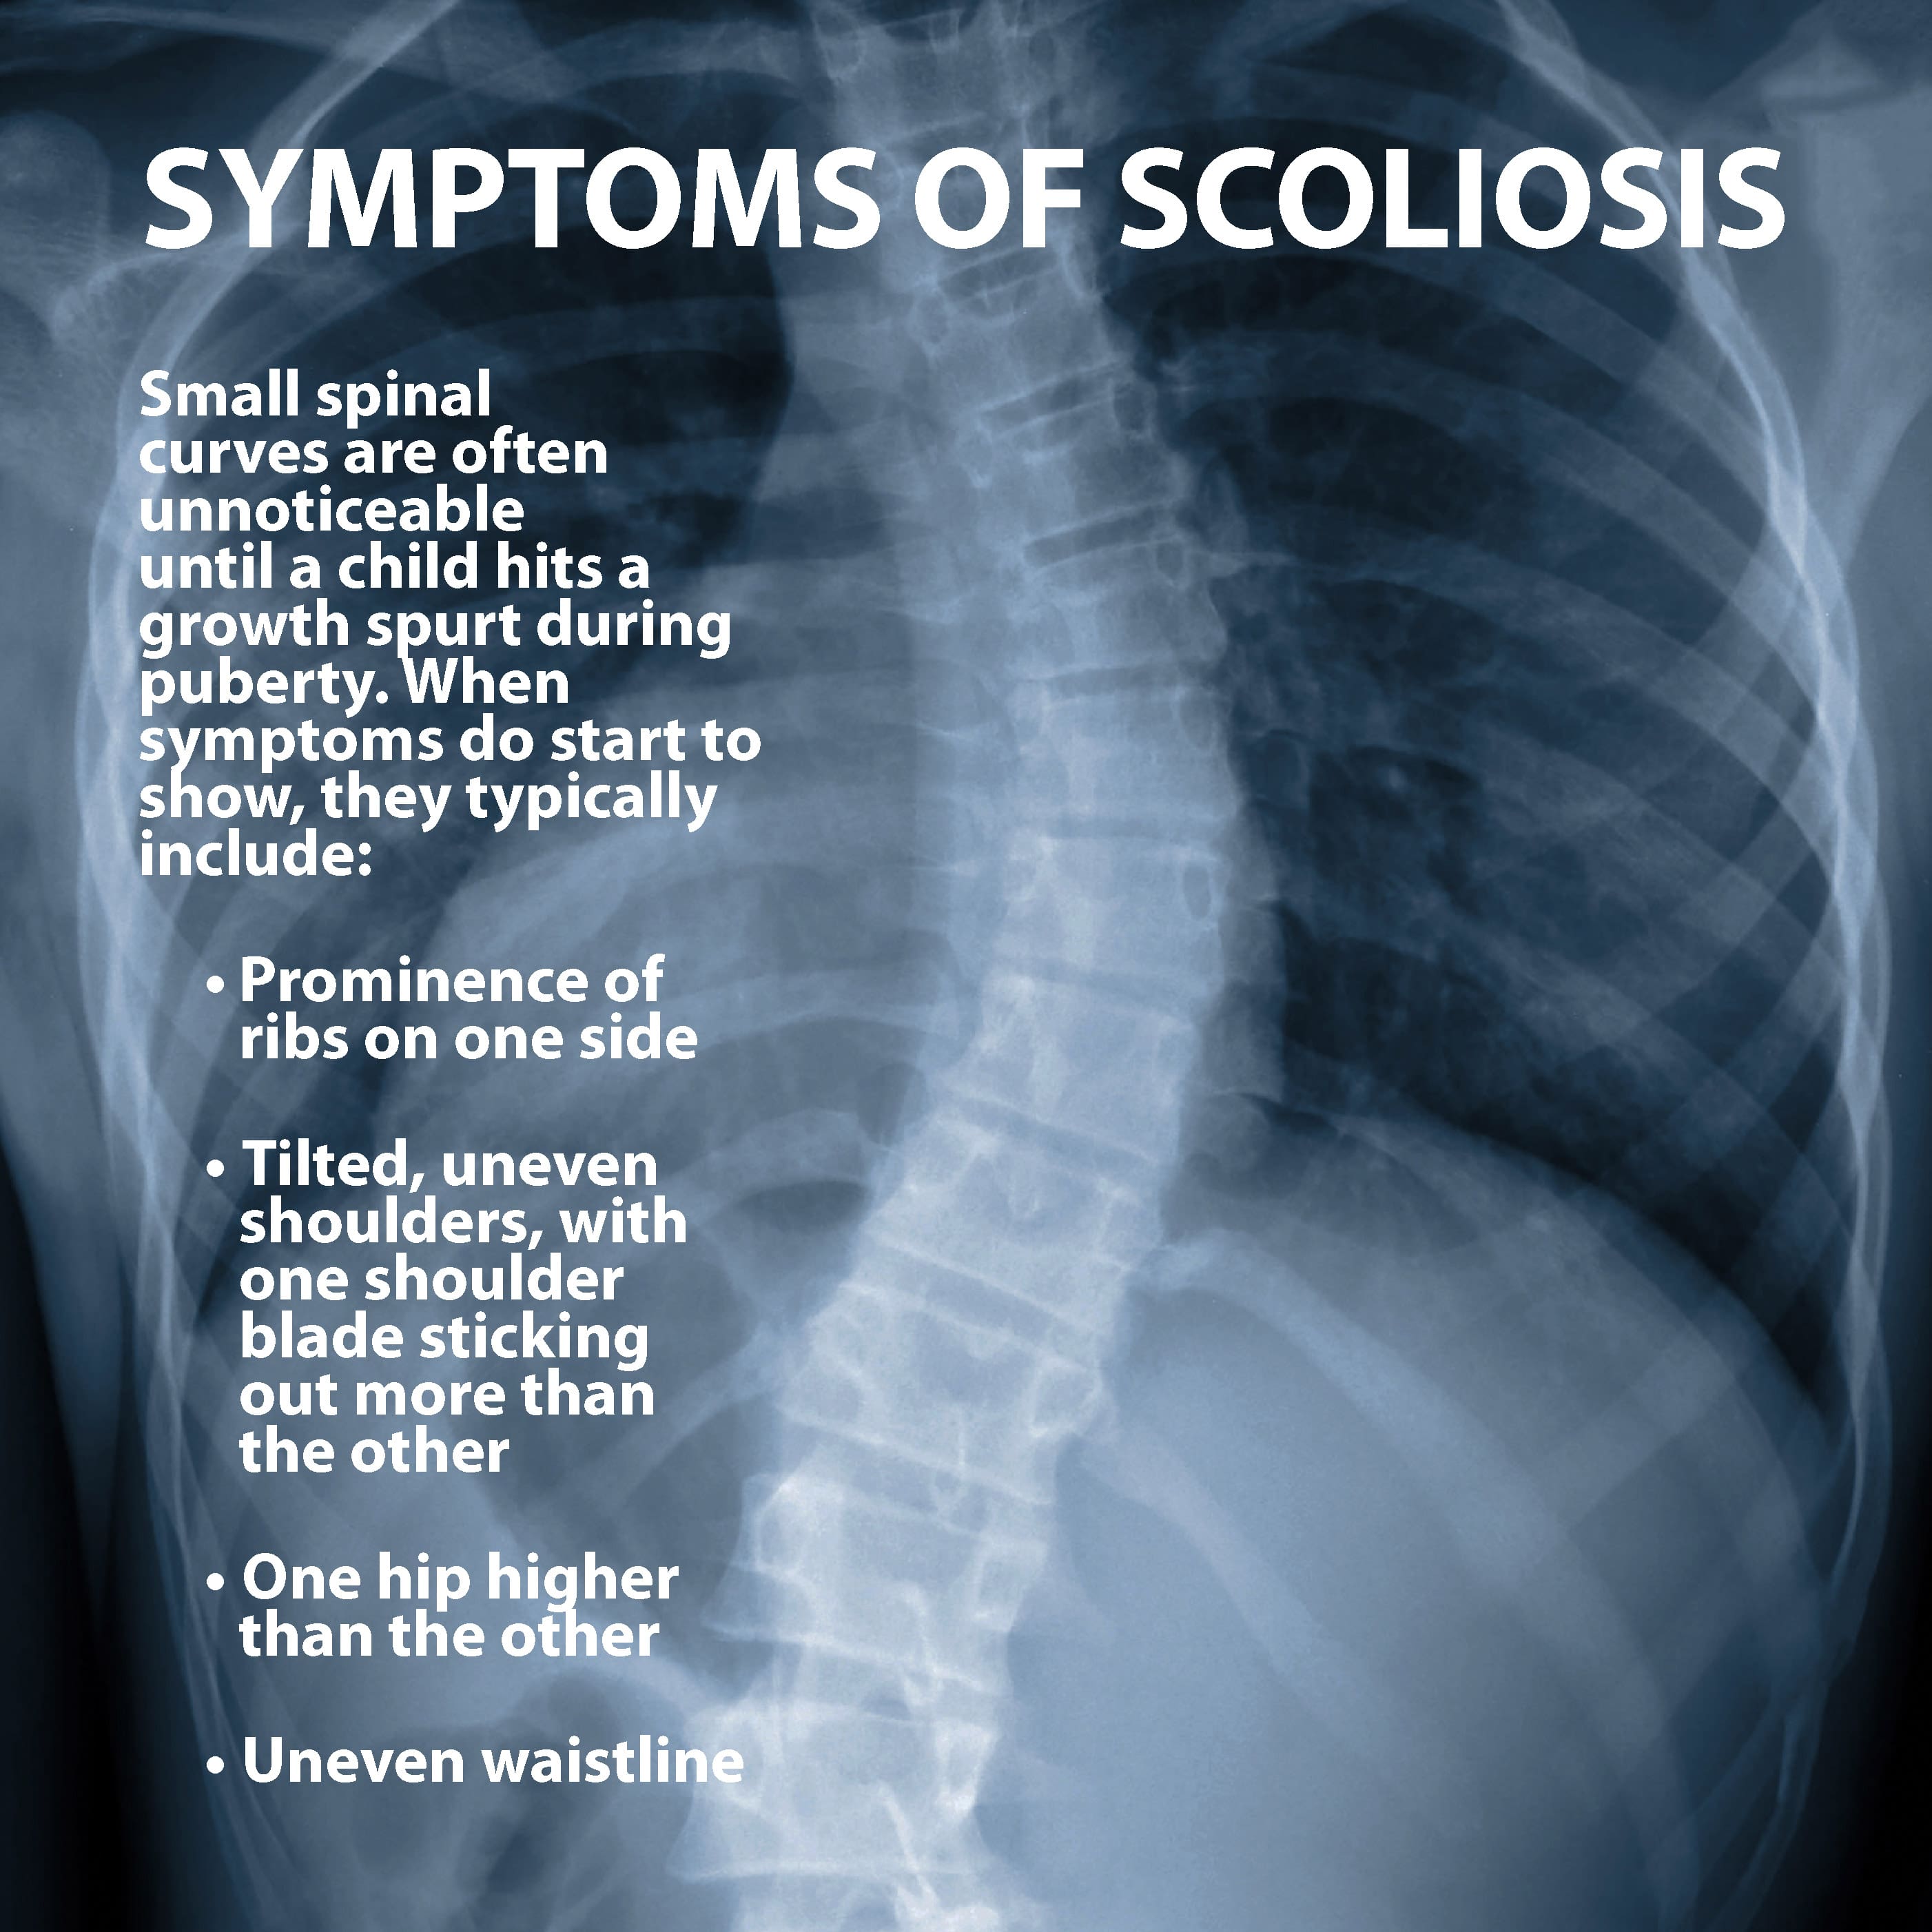 Symptoms of Scoliosis Graphic